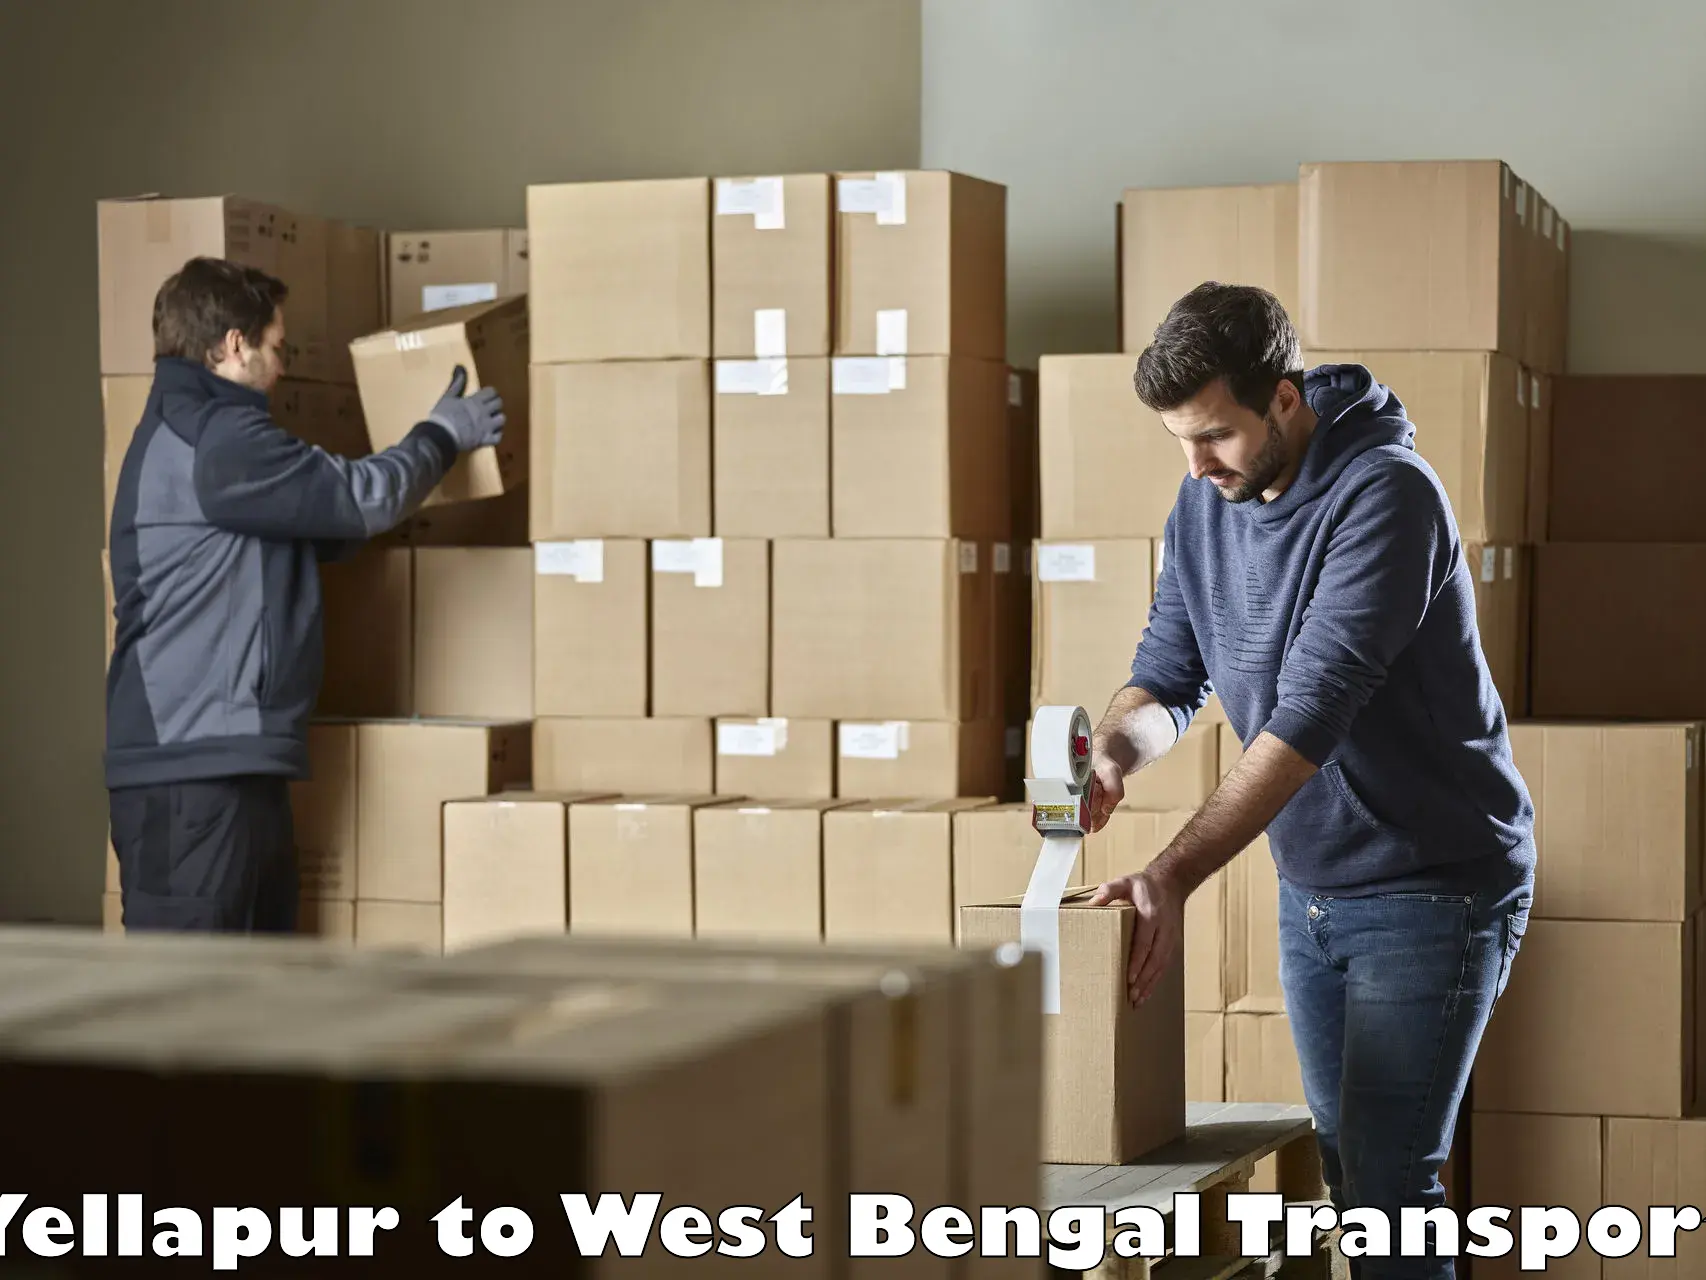 Shipping partner Yellapur to Kolkata